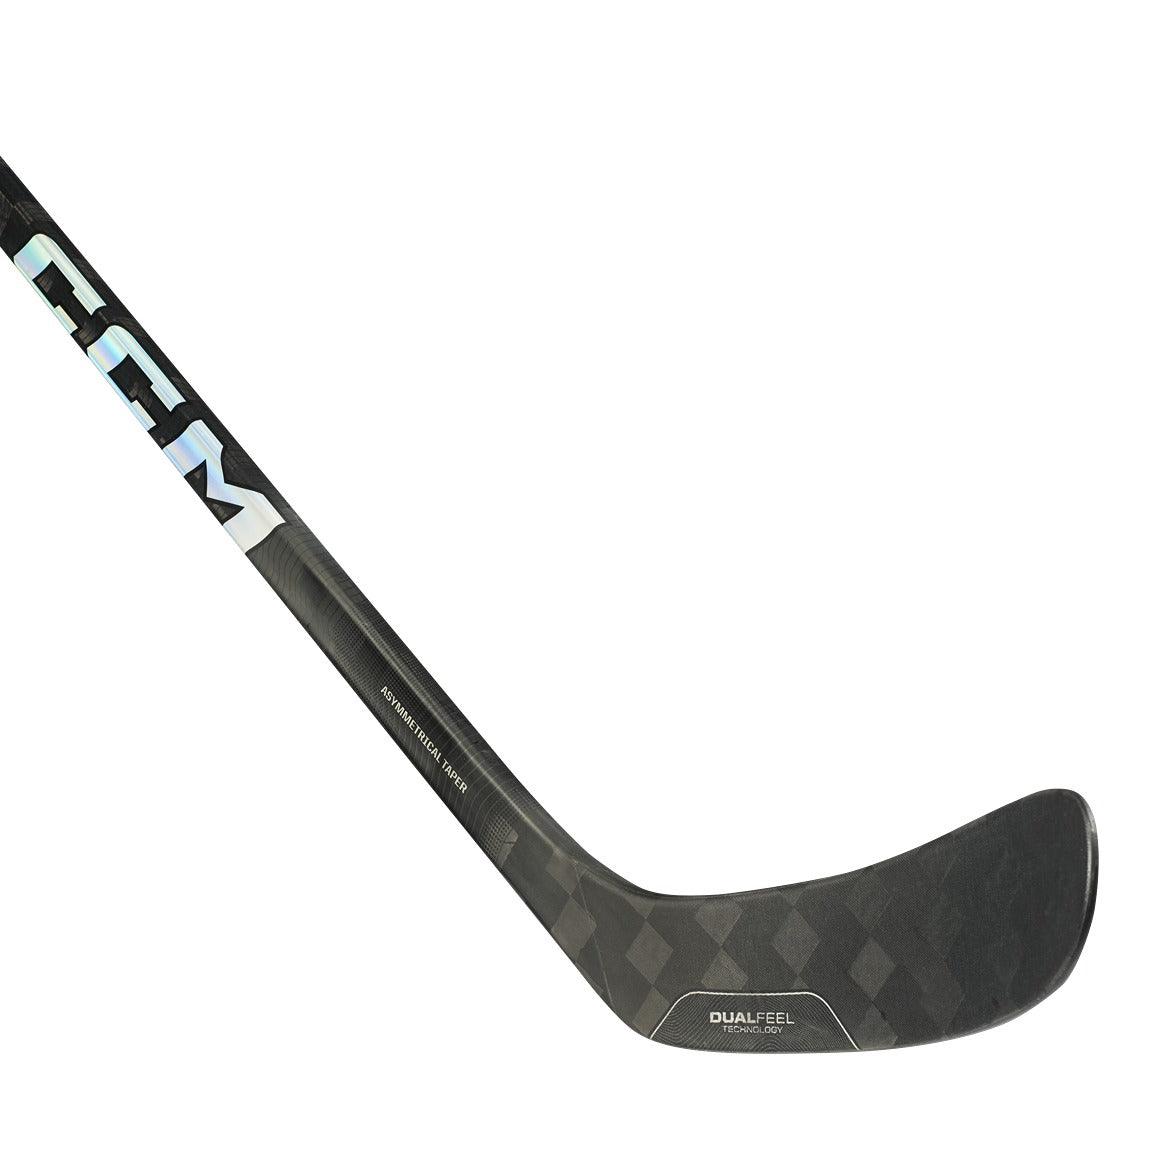 CCM Ribcor Trigger 8 Pro (Chrome) Hockey Stick - Intermediate